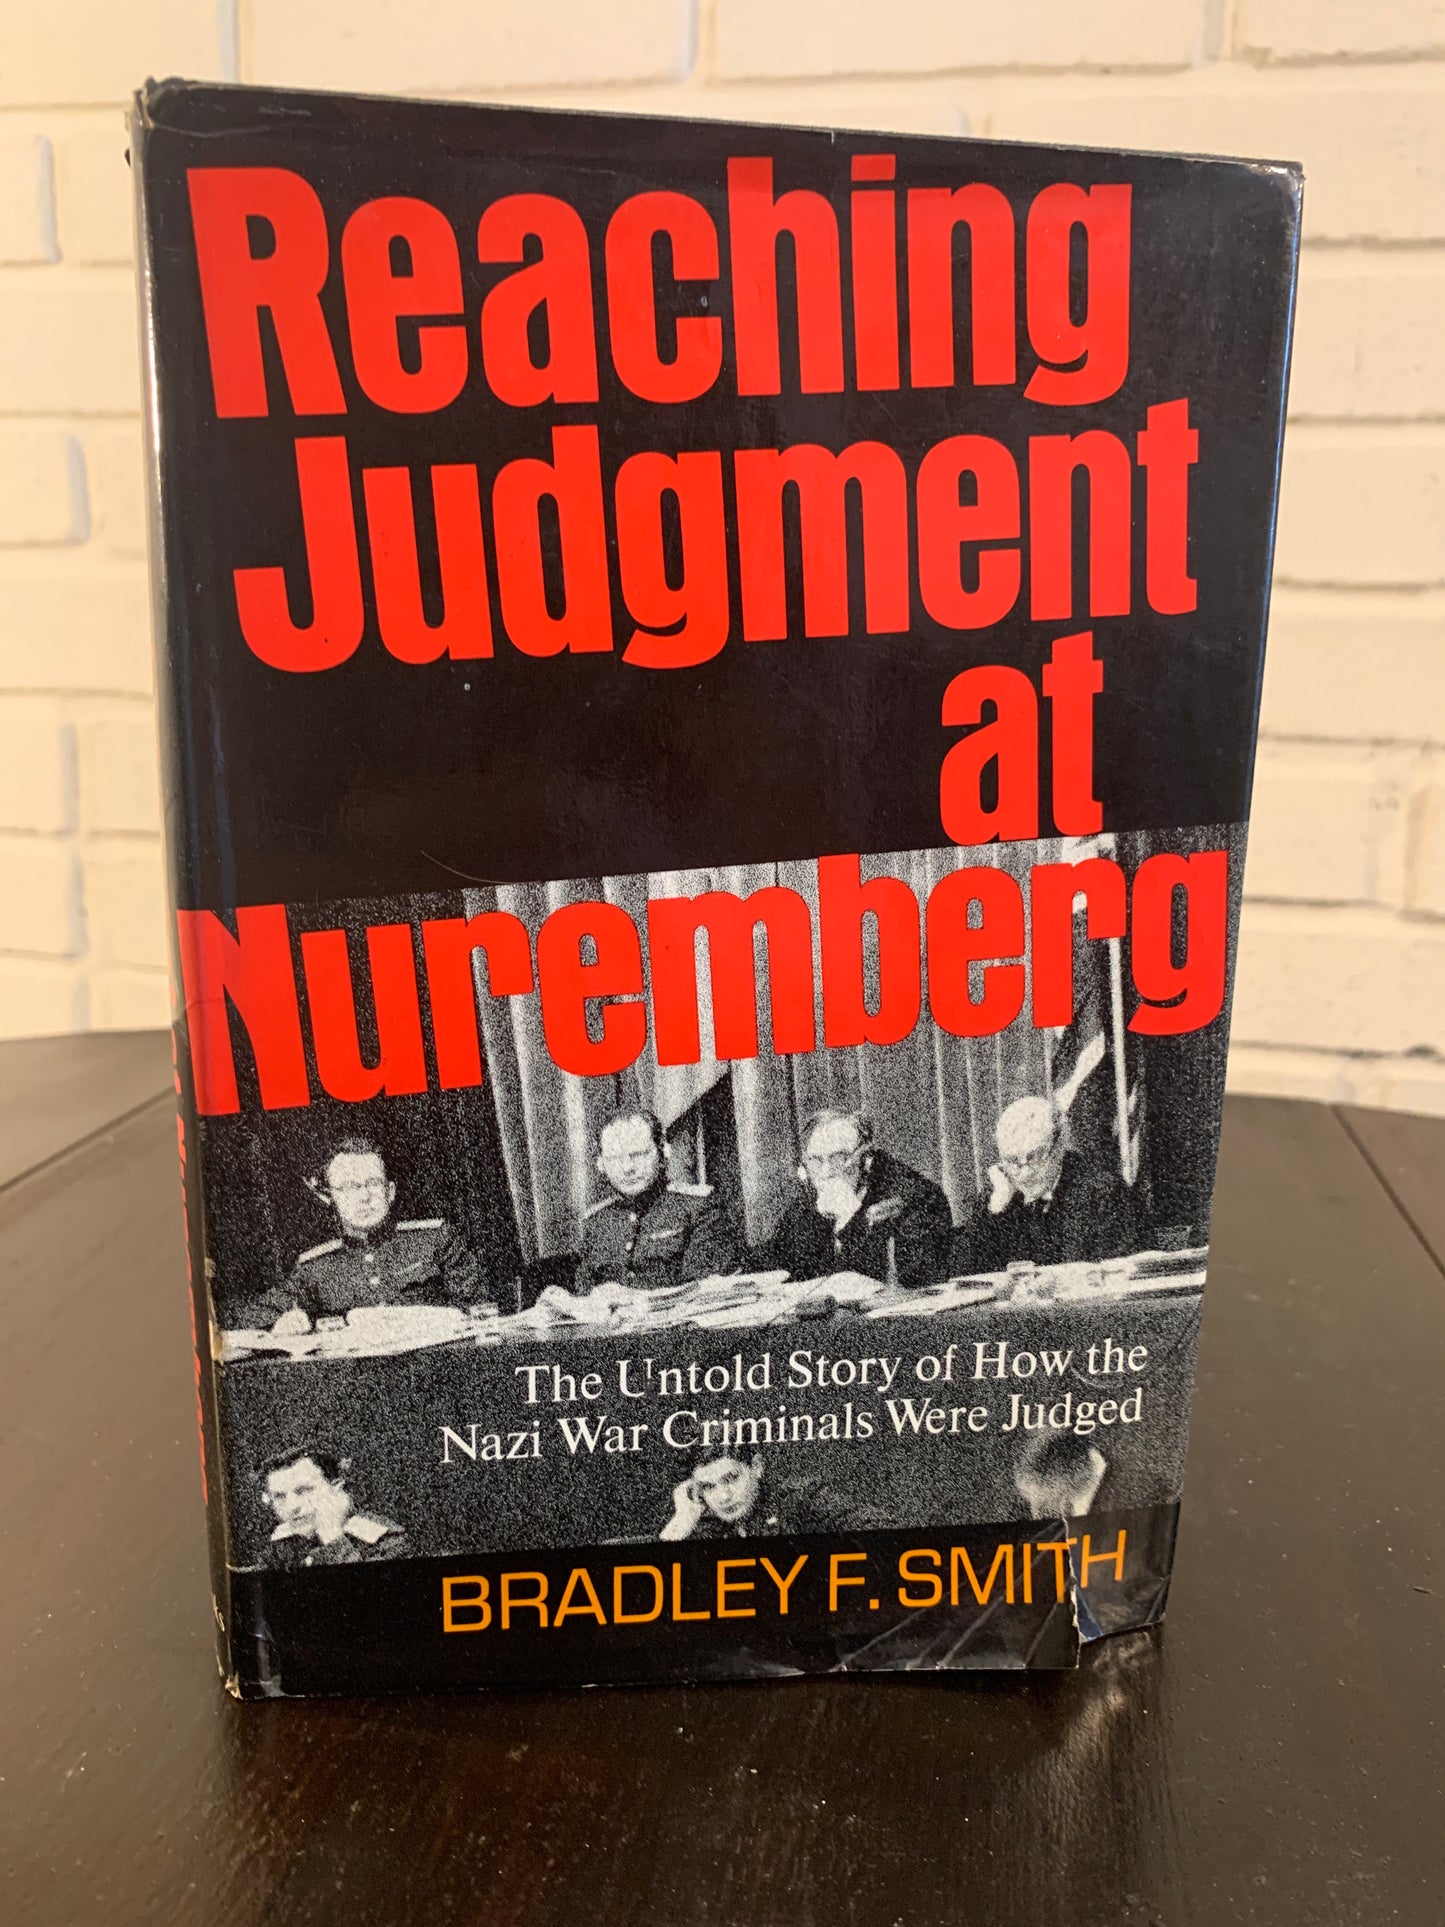 Reaching Judgment at Nuremberg: Nazi War Criminals were Judged by Bradley F. Smith 1977